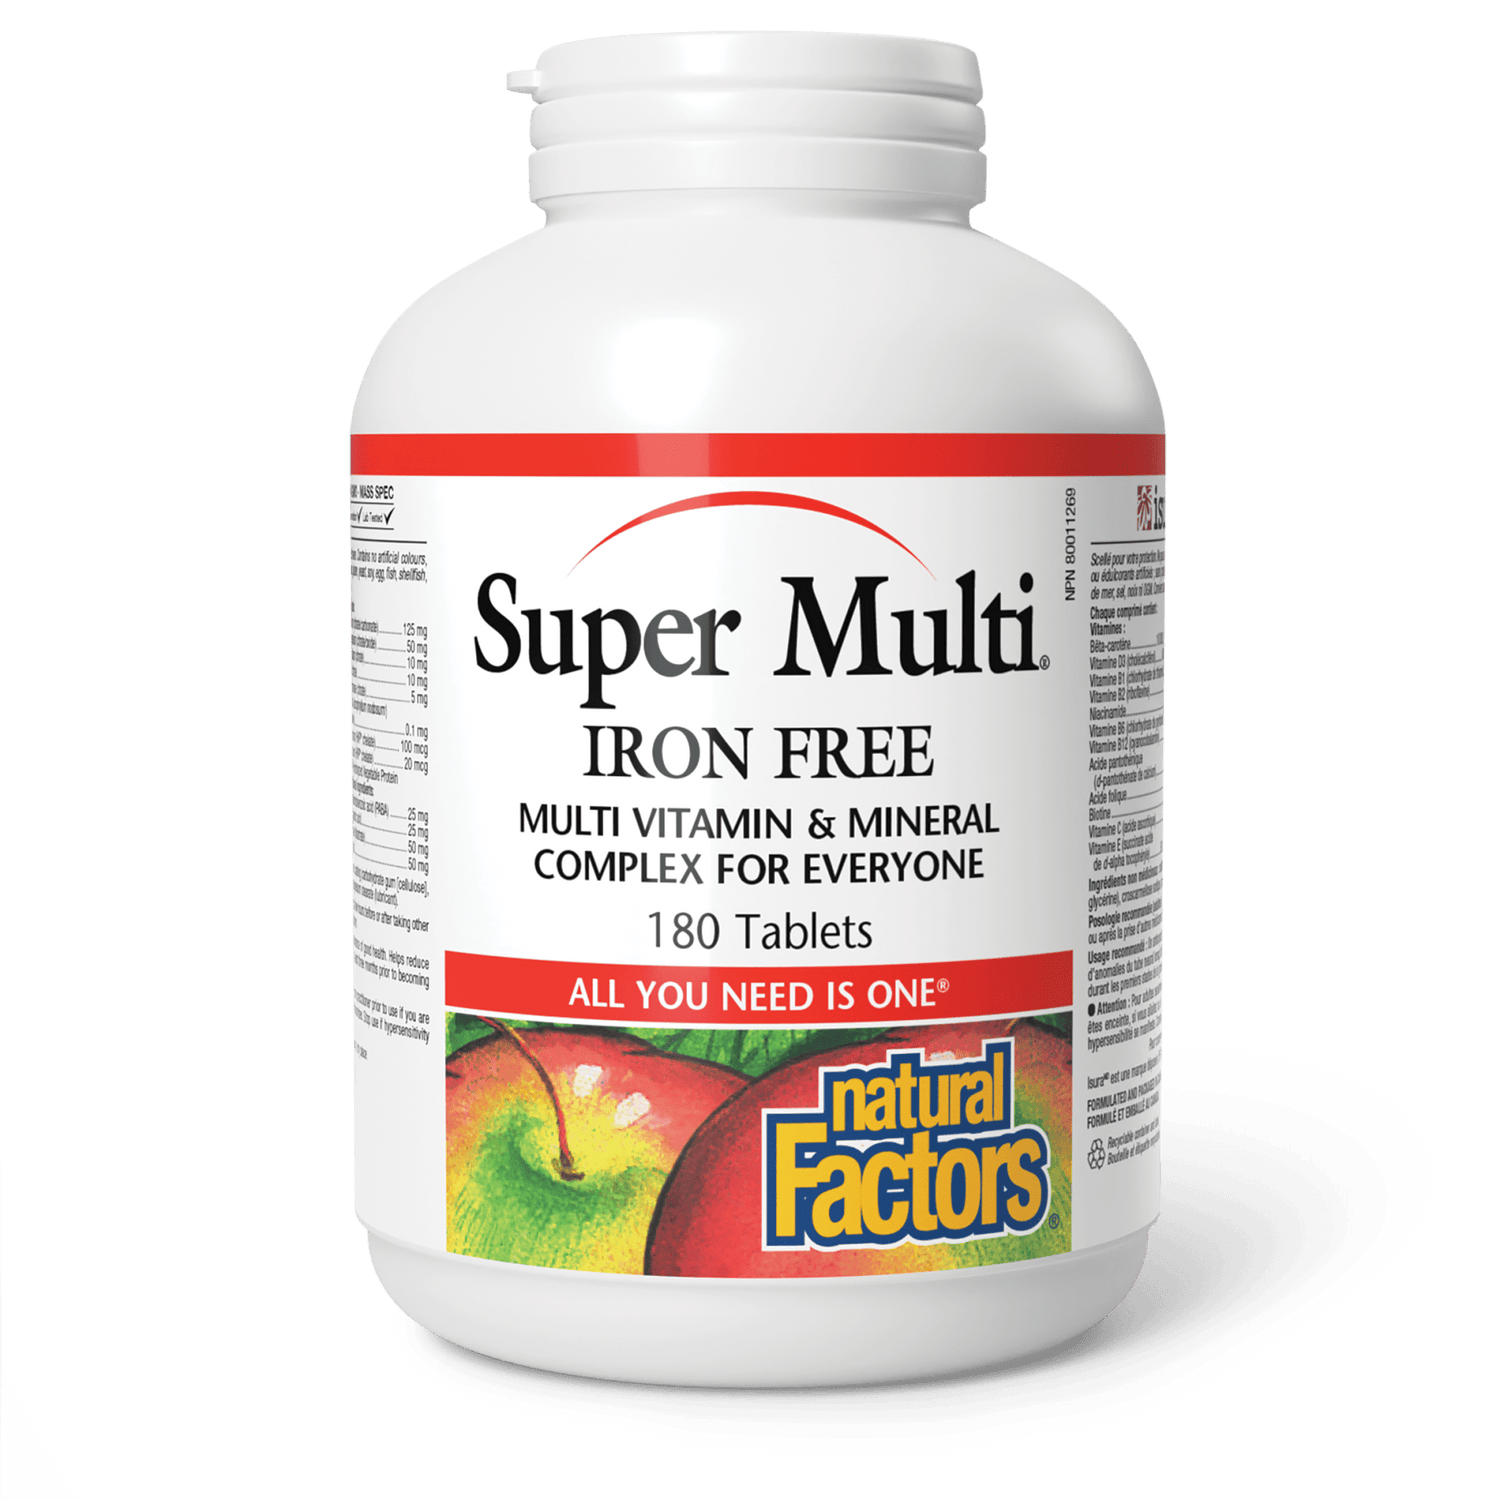 Super Multi Iron Free, Natural Factors|v|image|1509